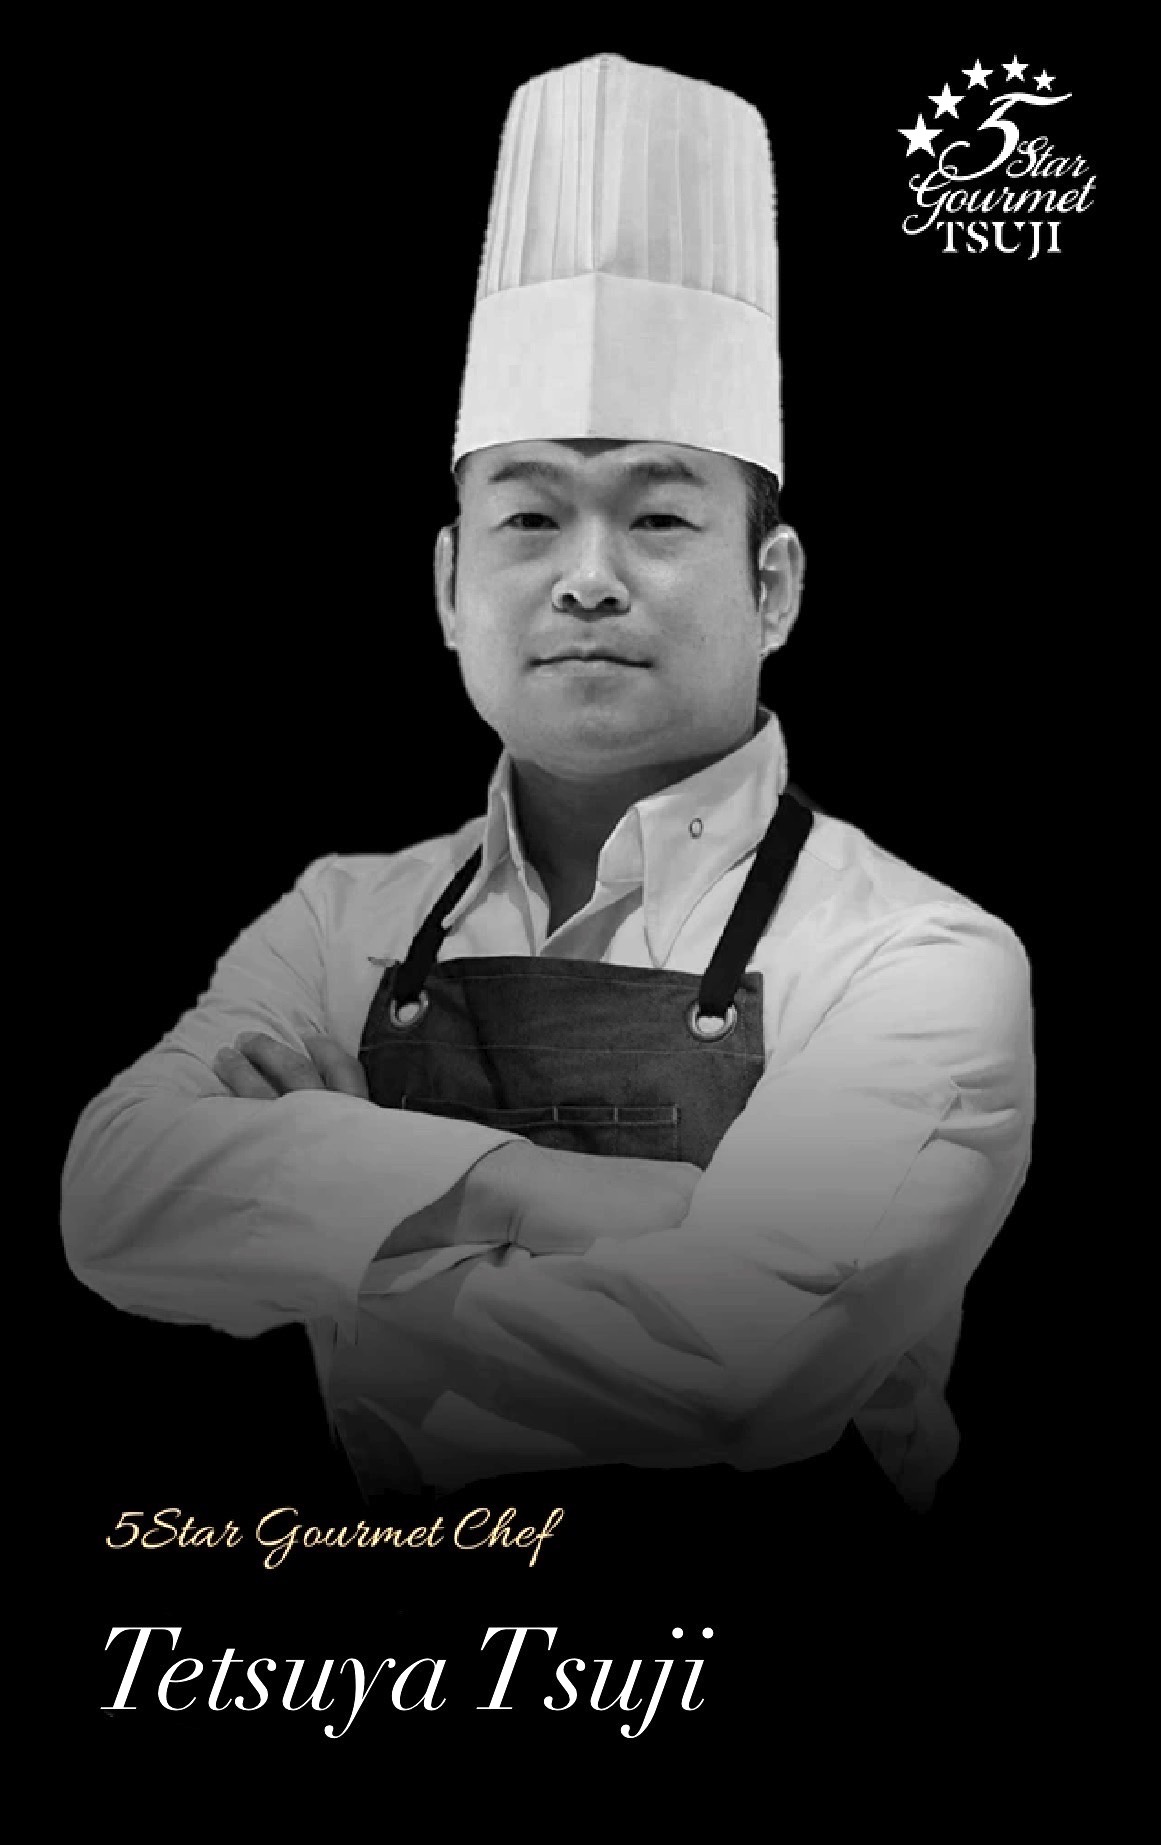 Michelin chef launches Kickstarter Campaign for "5 Star Gourmet TSUJI Premier Iron Frying Pan"